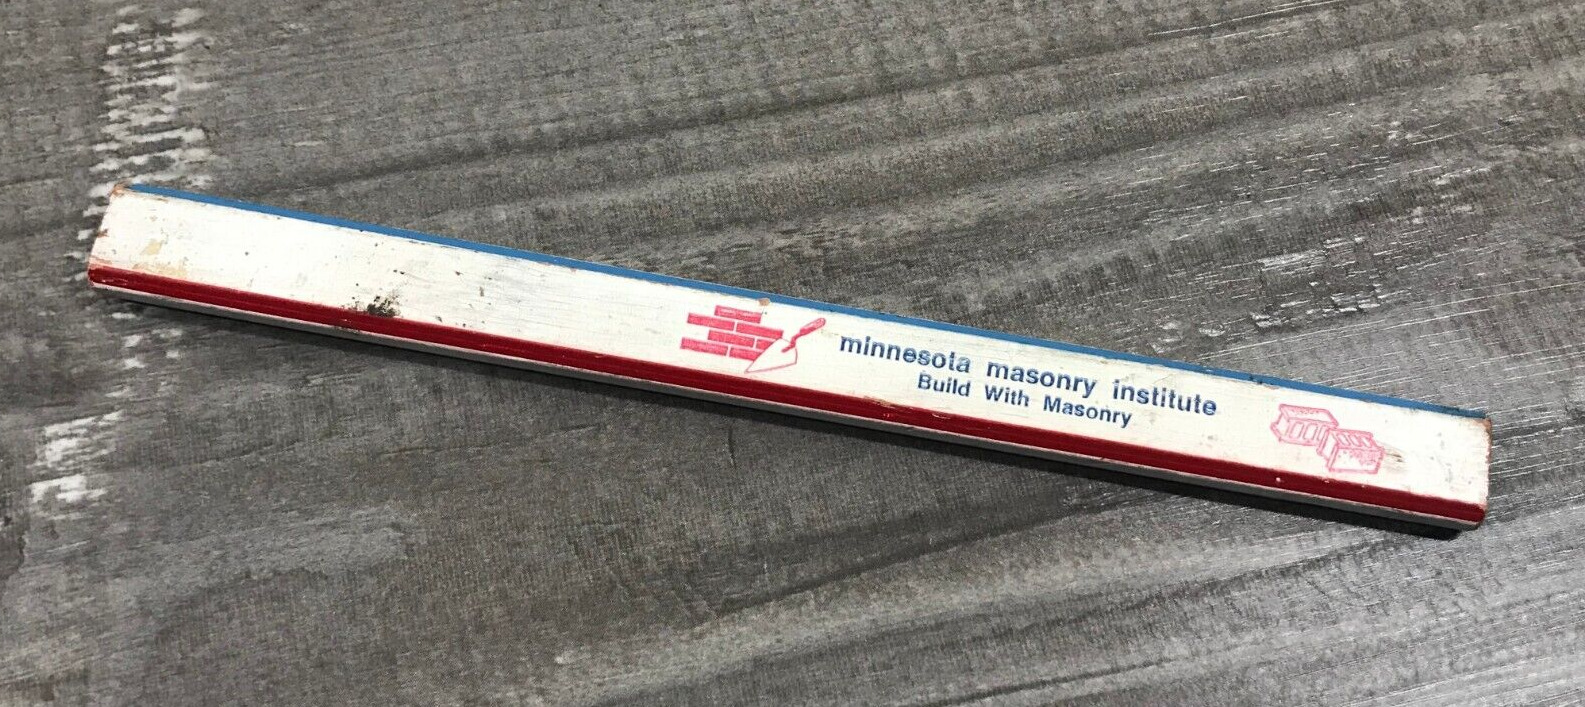 Vintage Minnesota Masonry Institute Advertising Carpenter Lead Pencil